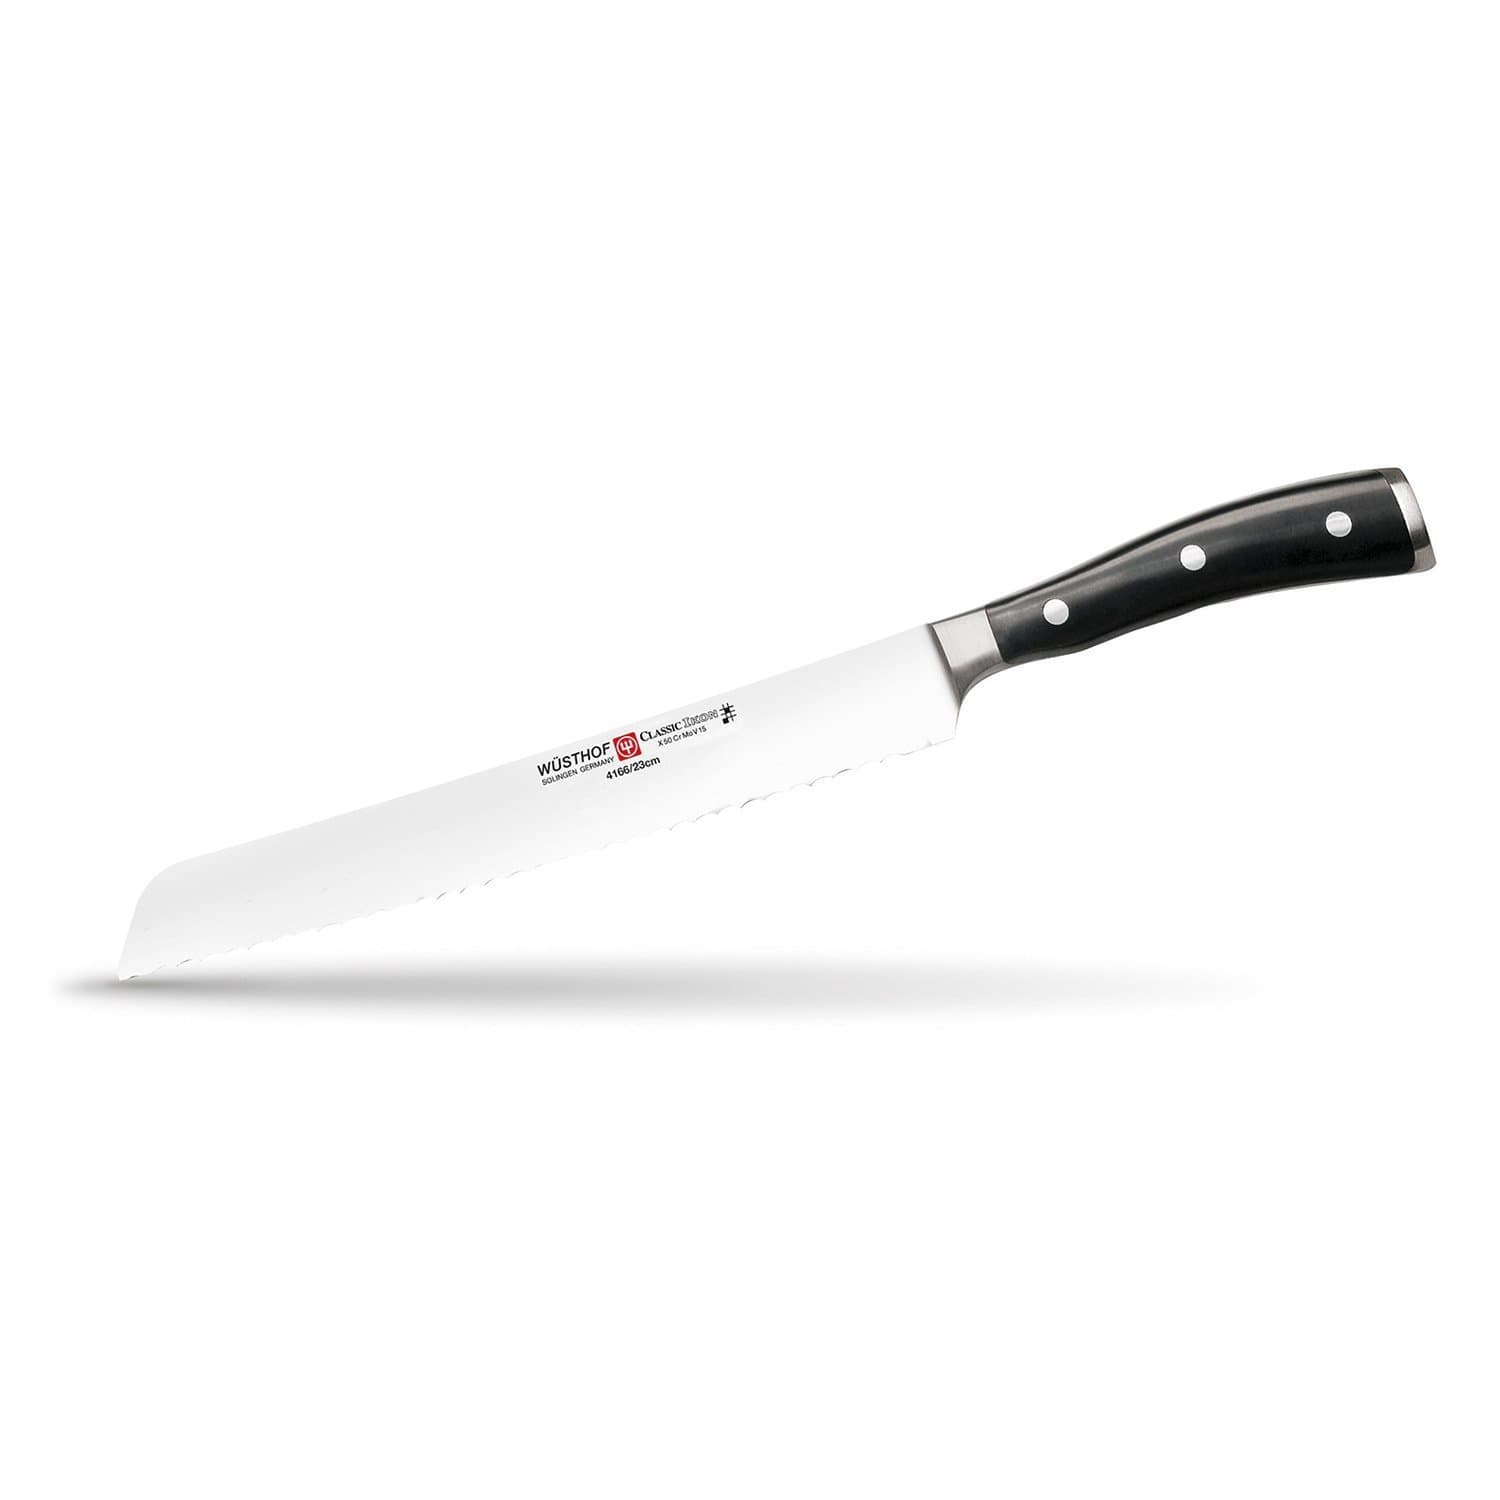 Wusthof Classic Ikon Bread Knife - Black and Sliver - 827845 - Jashanmal Home